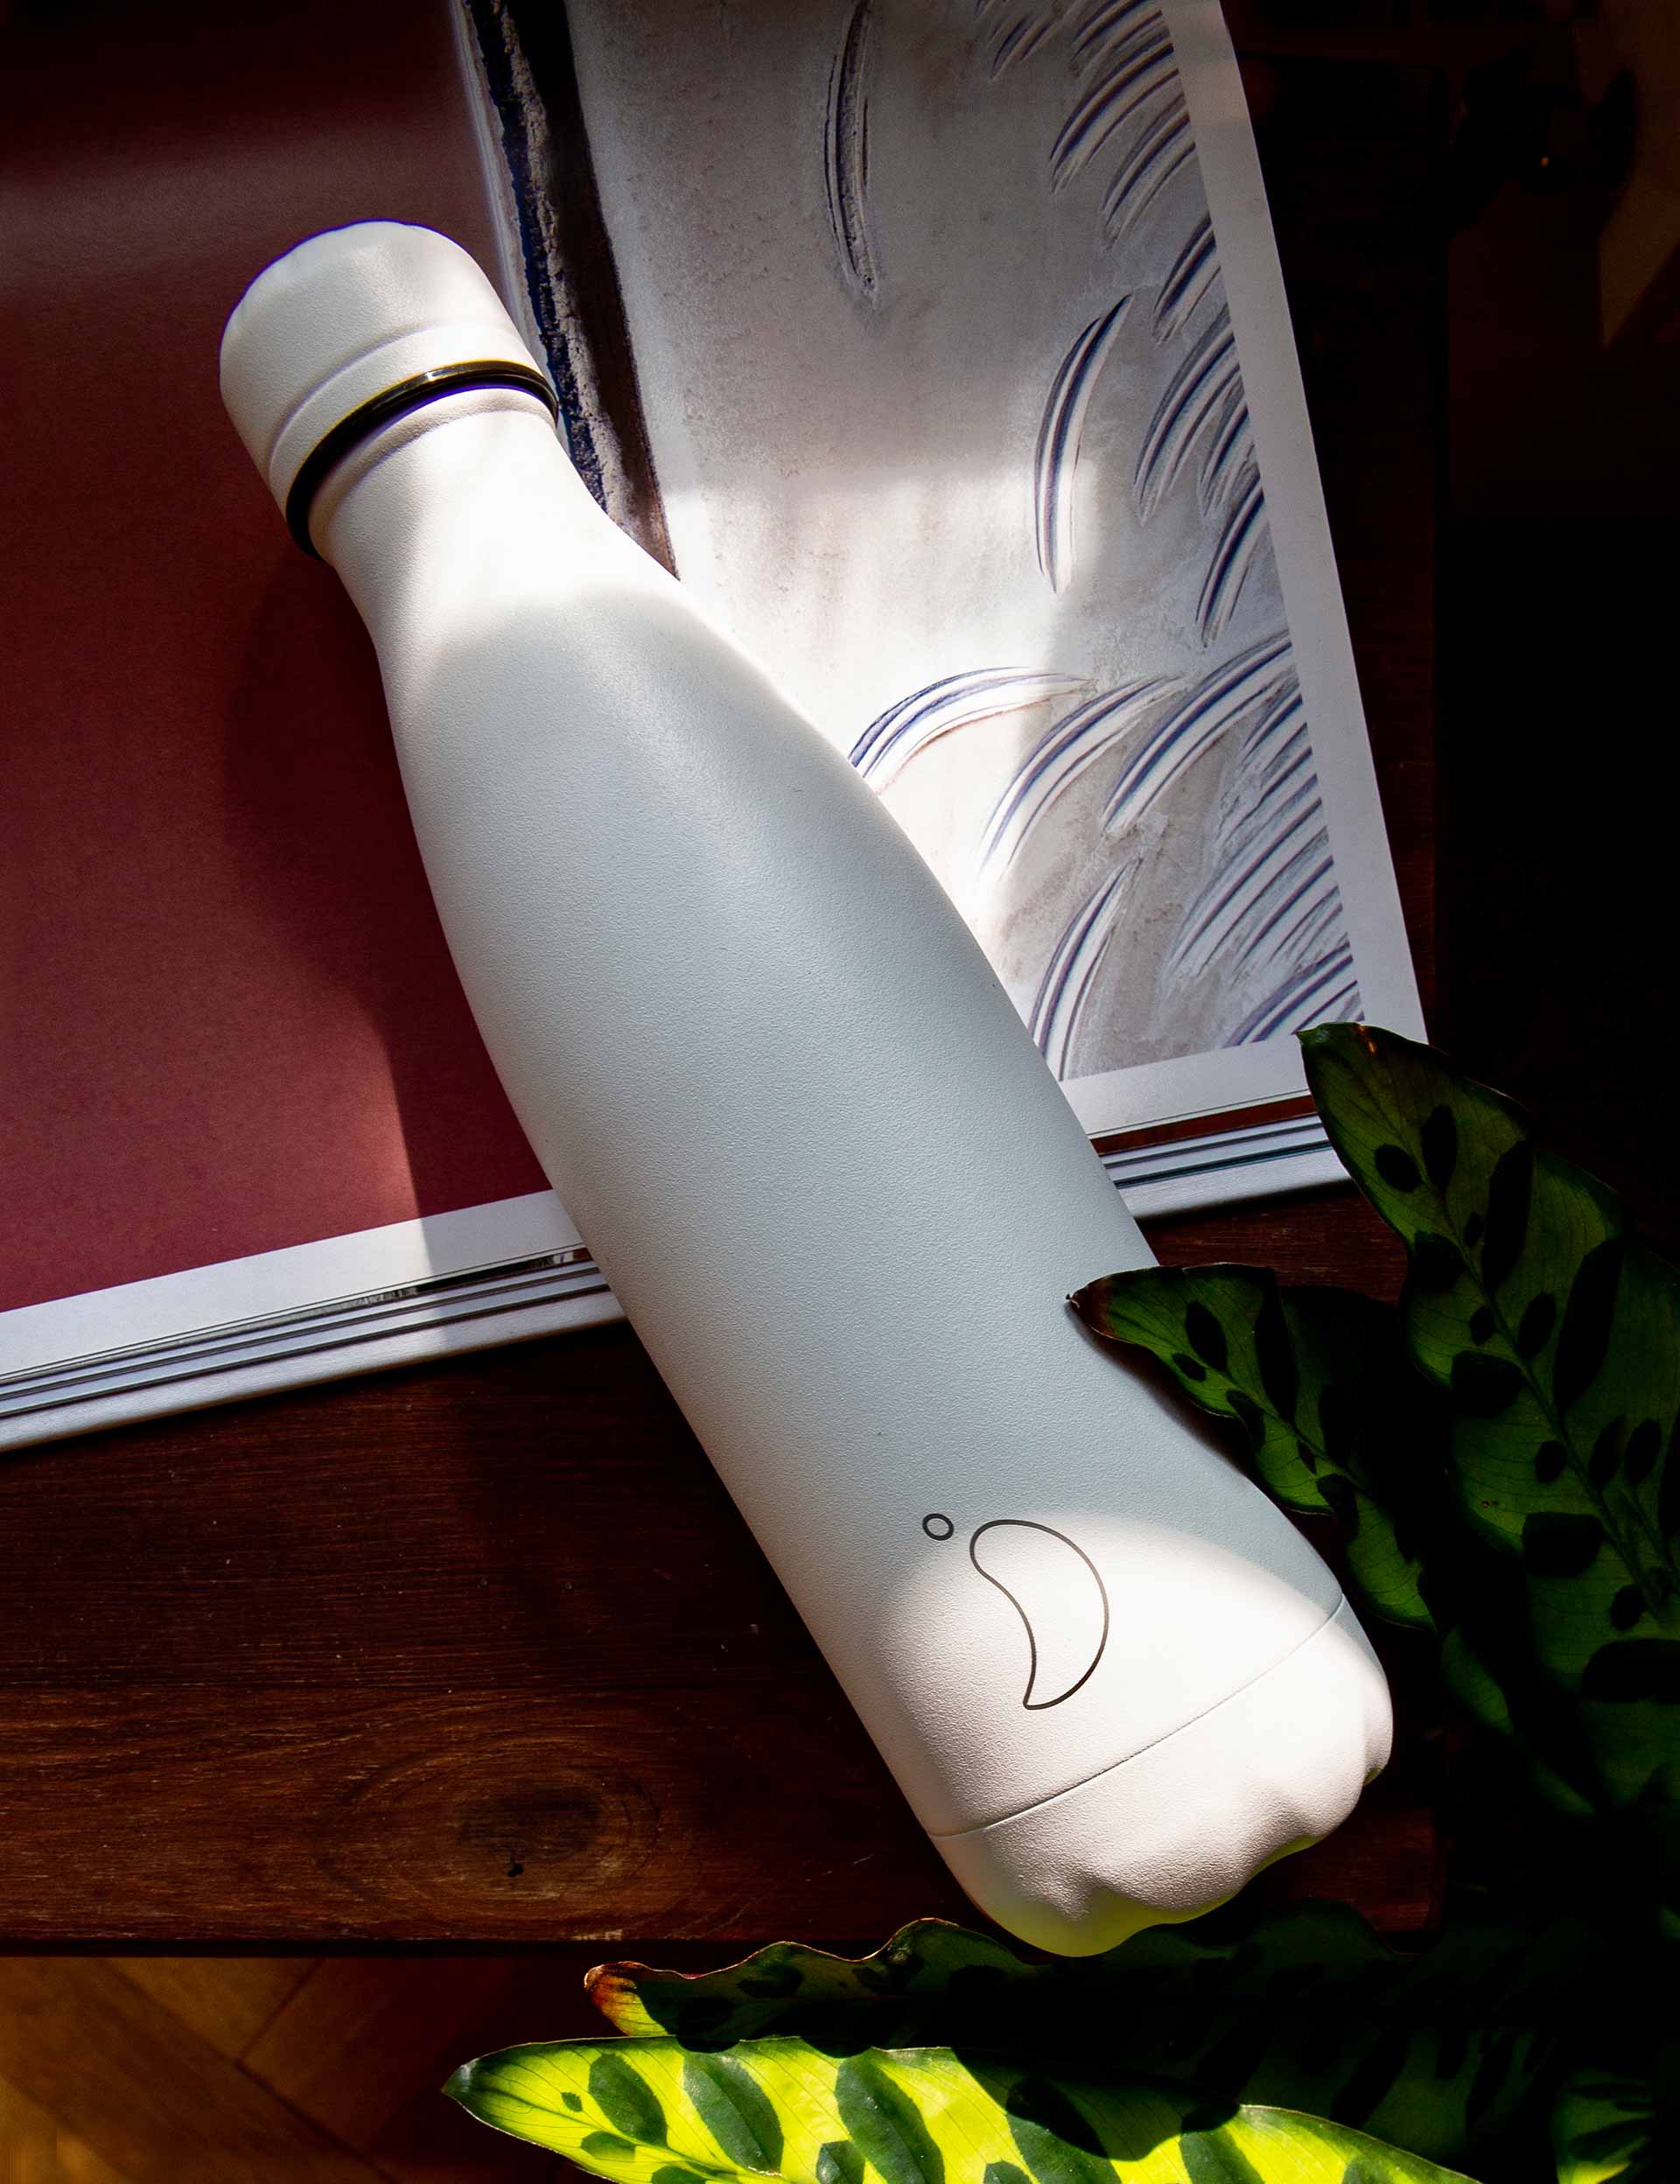 Chilly's Bottle 500ml Monochrome All White – Flux